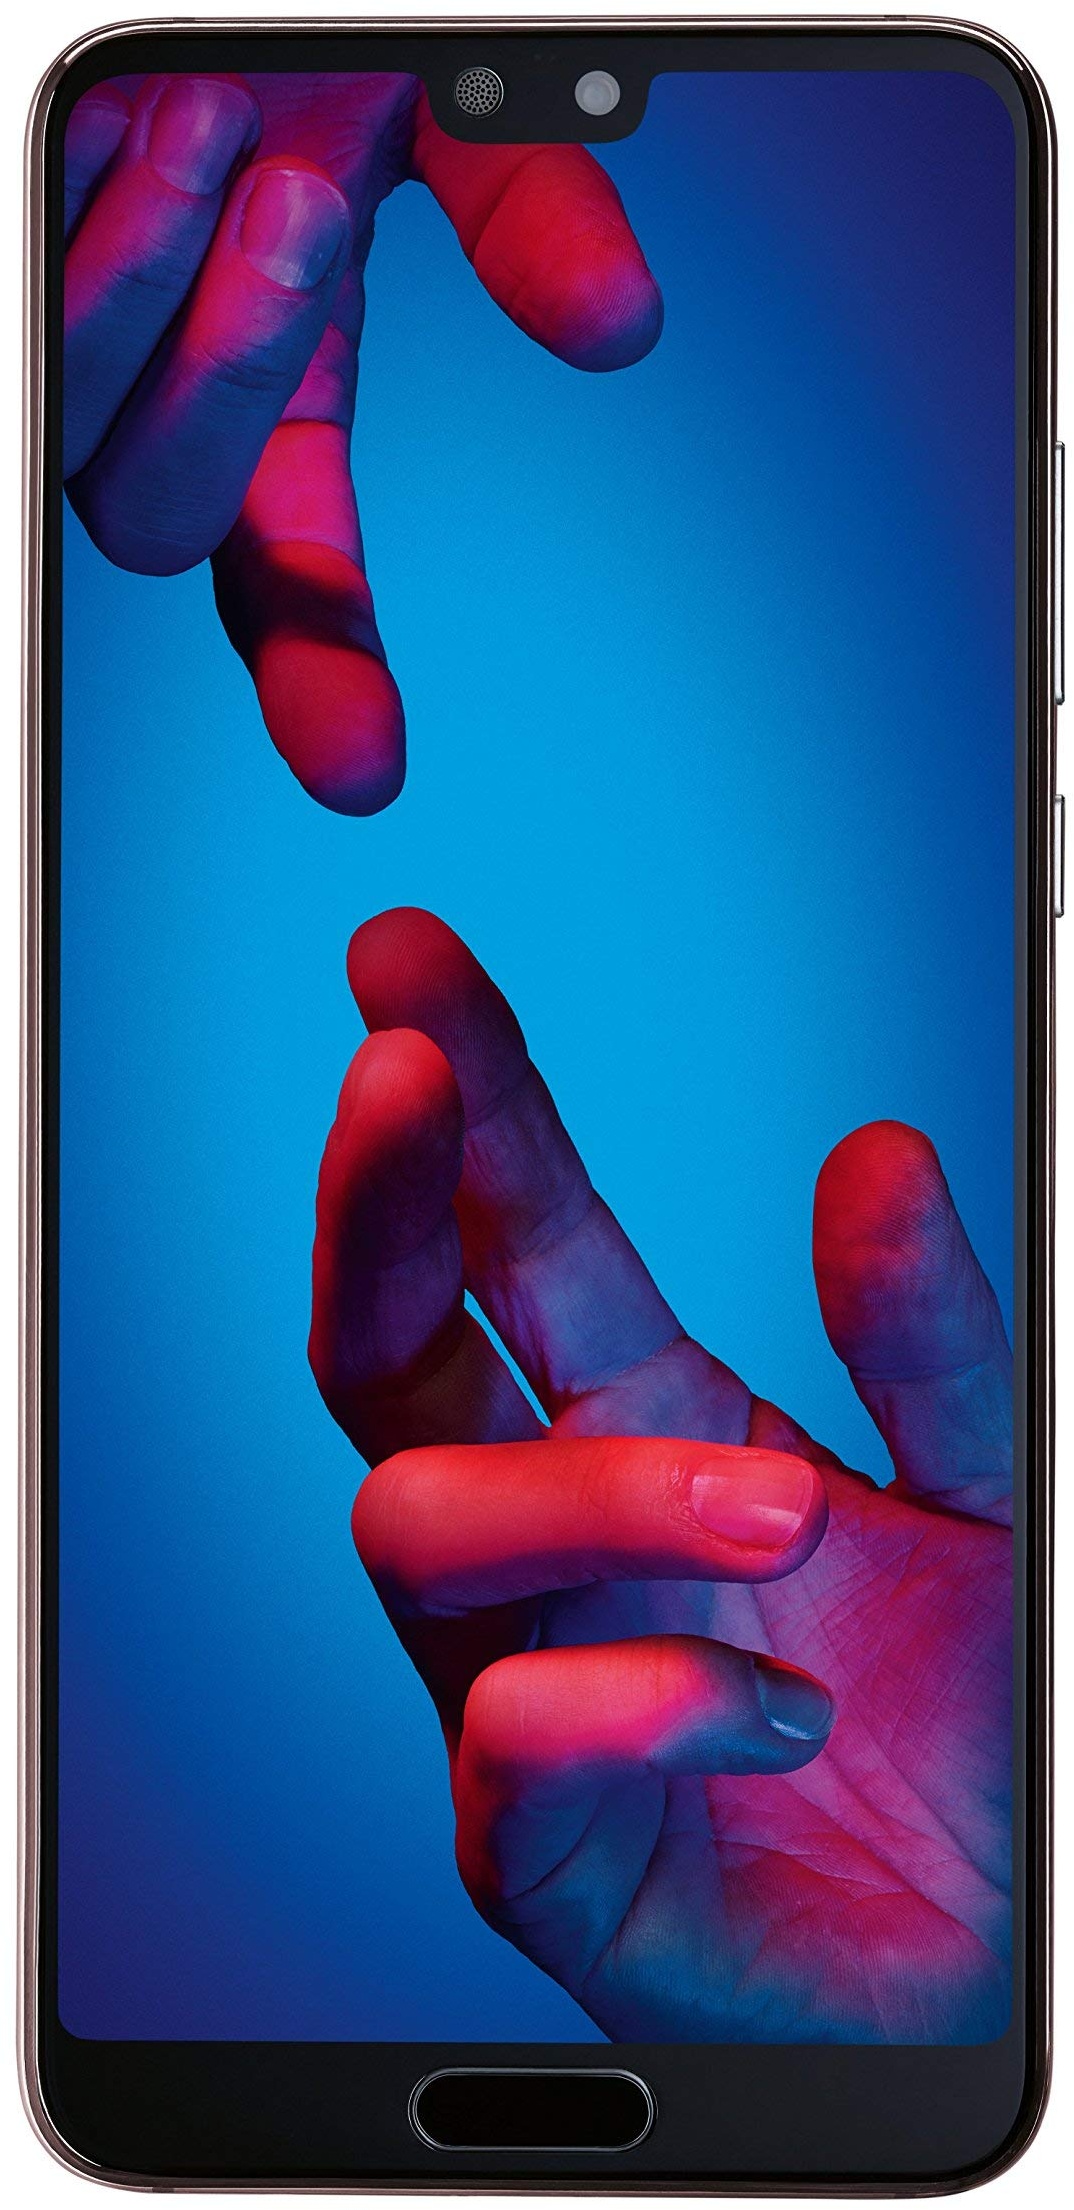 Huawei P20 Smartphone - 6901443214549 14,73 cm (5,8 Zoll) (4G 128GB Dual Sim LCD, Android 8.1 (Oreo), Octa 8 Core 128GB, 4GB RAM, 12MP Kamera, 2x lossless Zoom) Pink Gold (International Version)